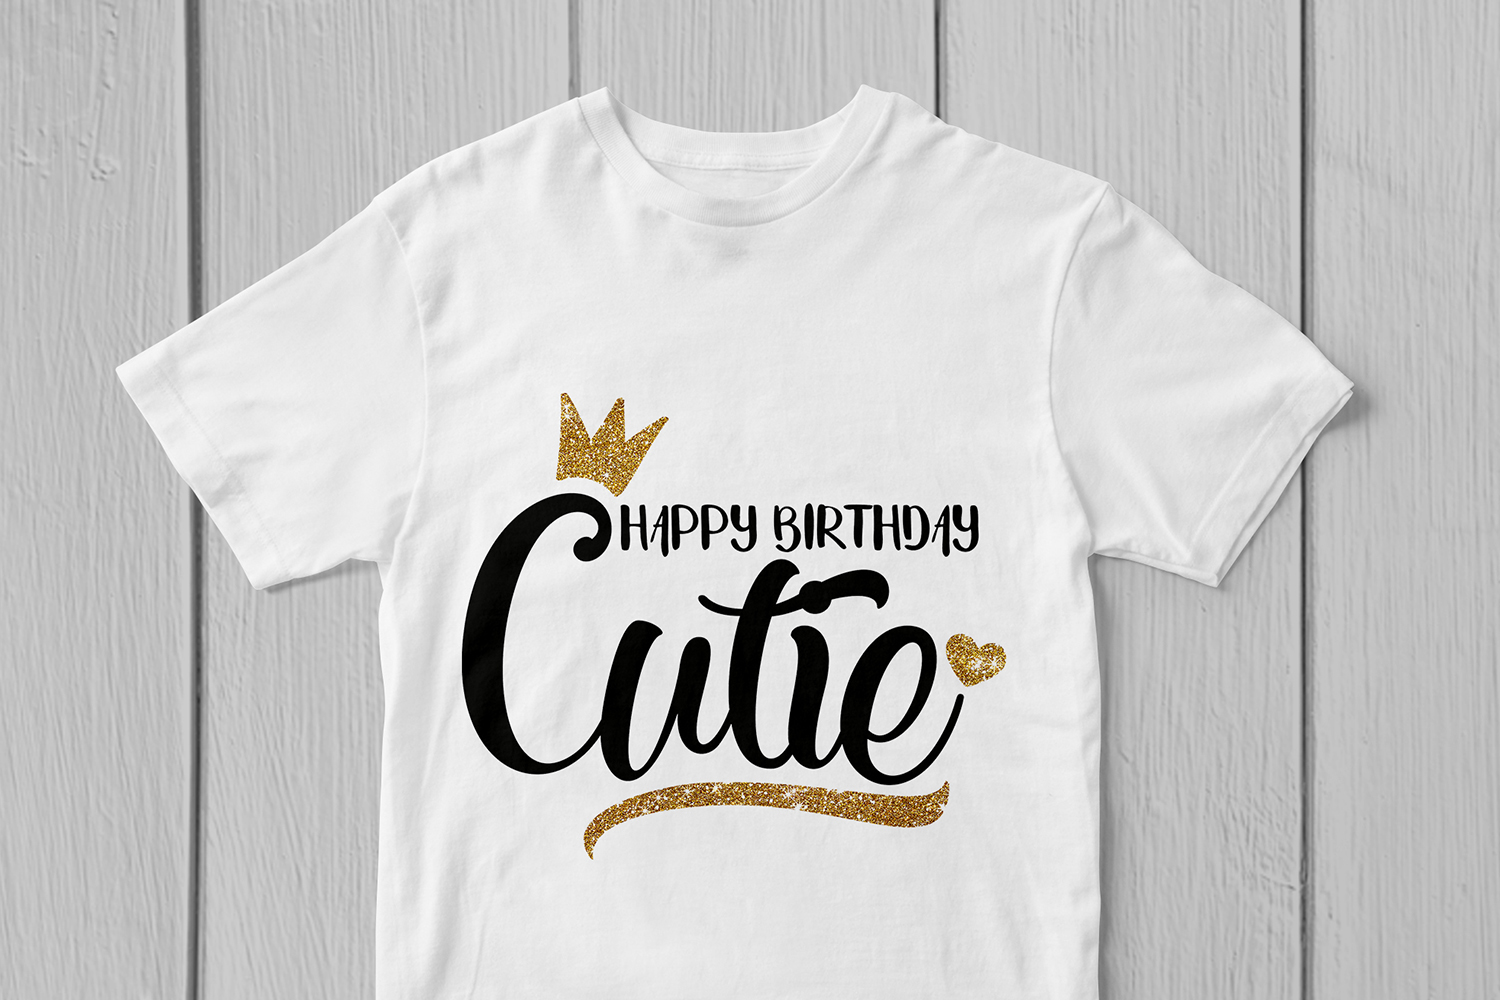 Download Happy Birthday Cutie - Birthday SVG EPS DXF PNG Cutting ...